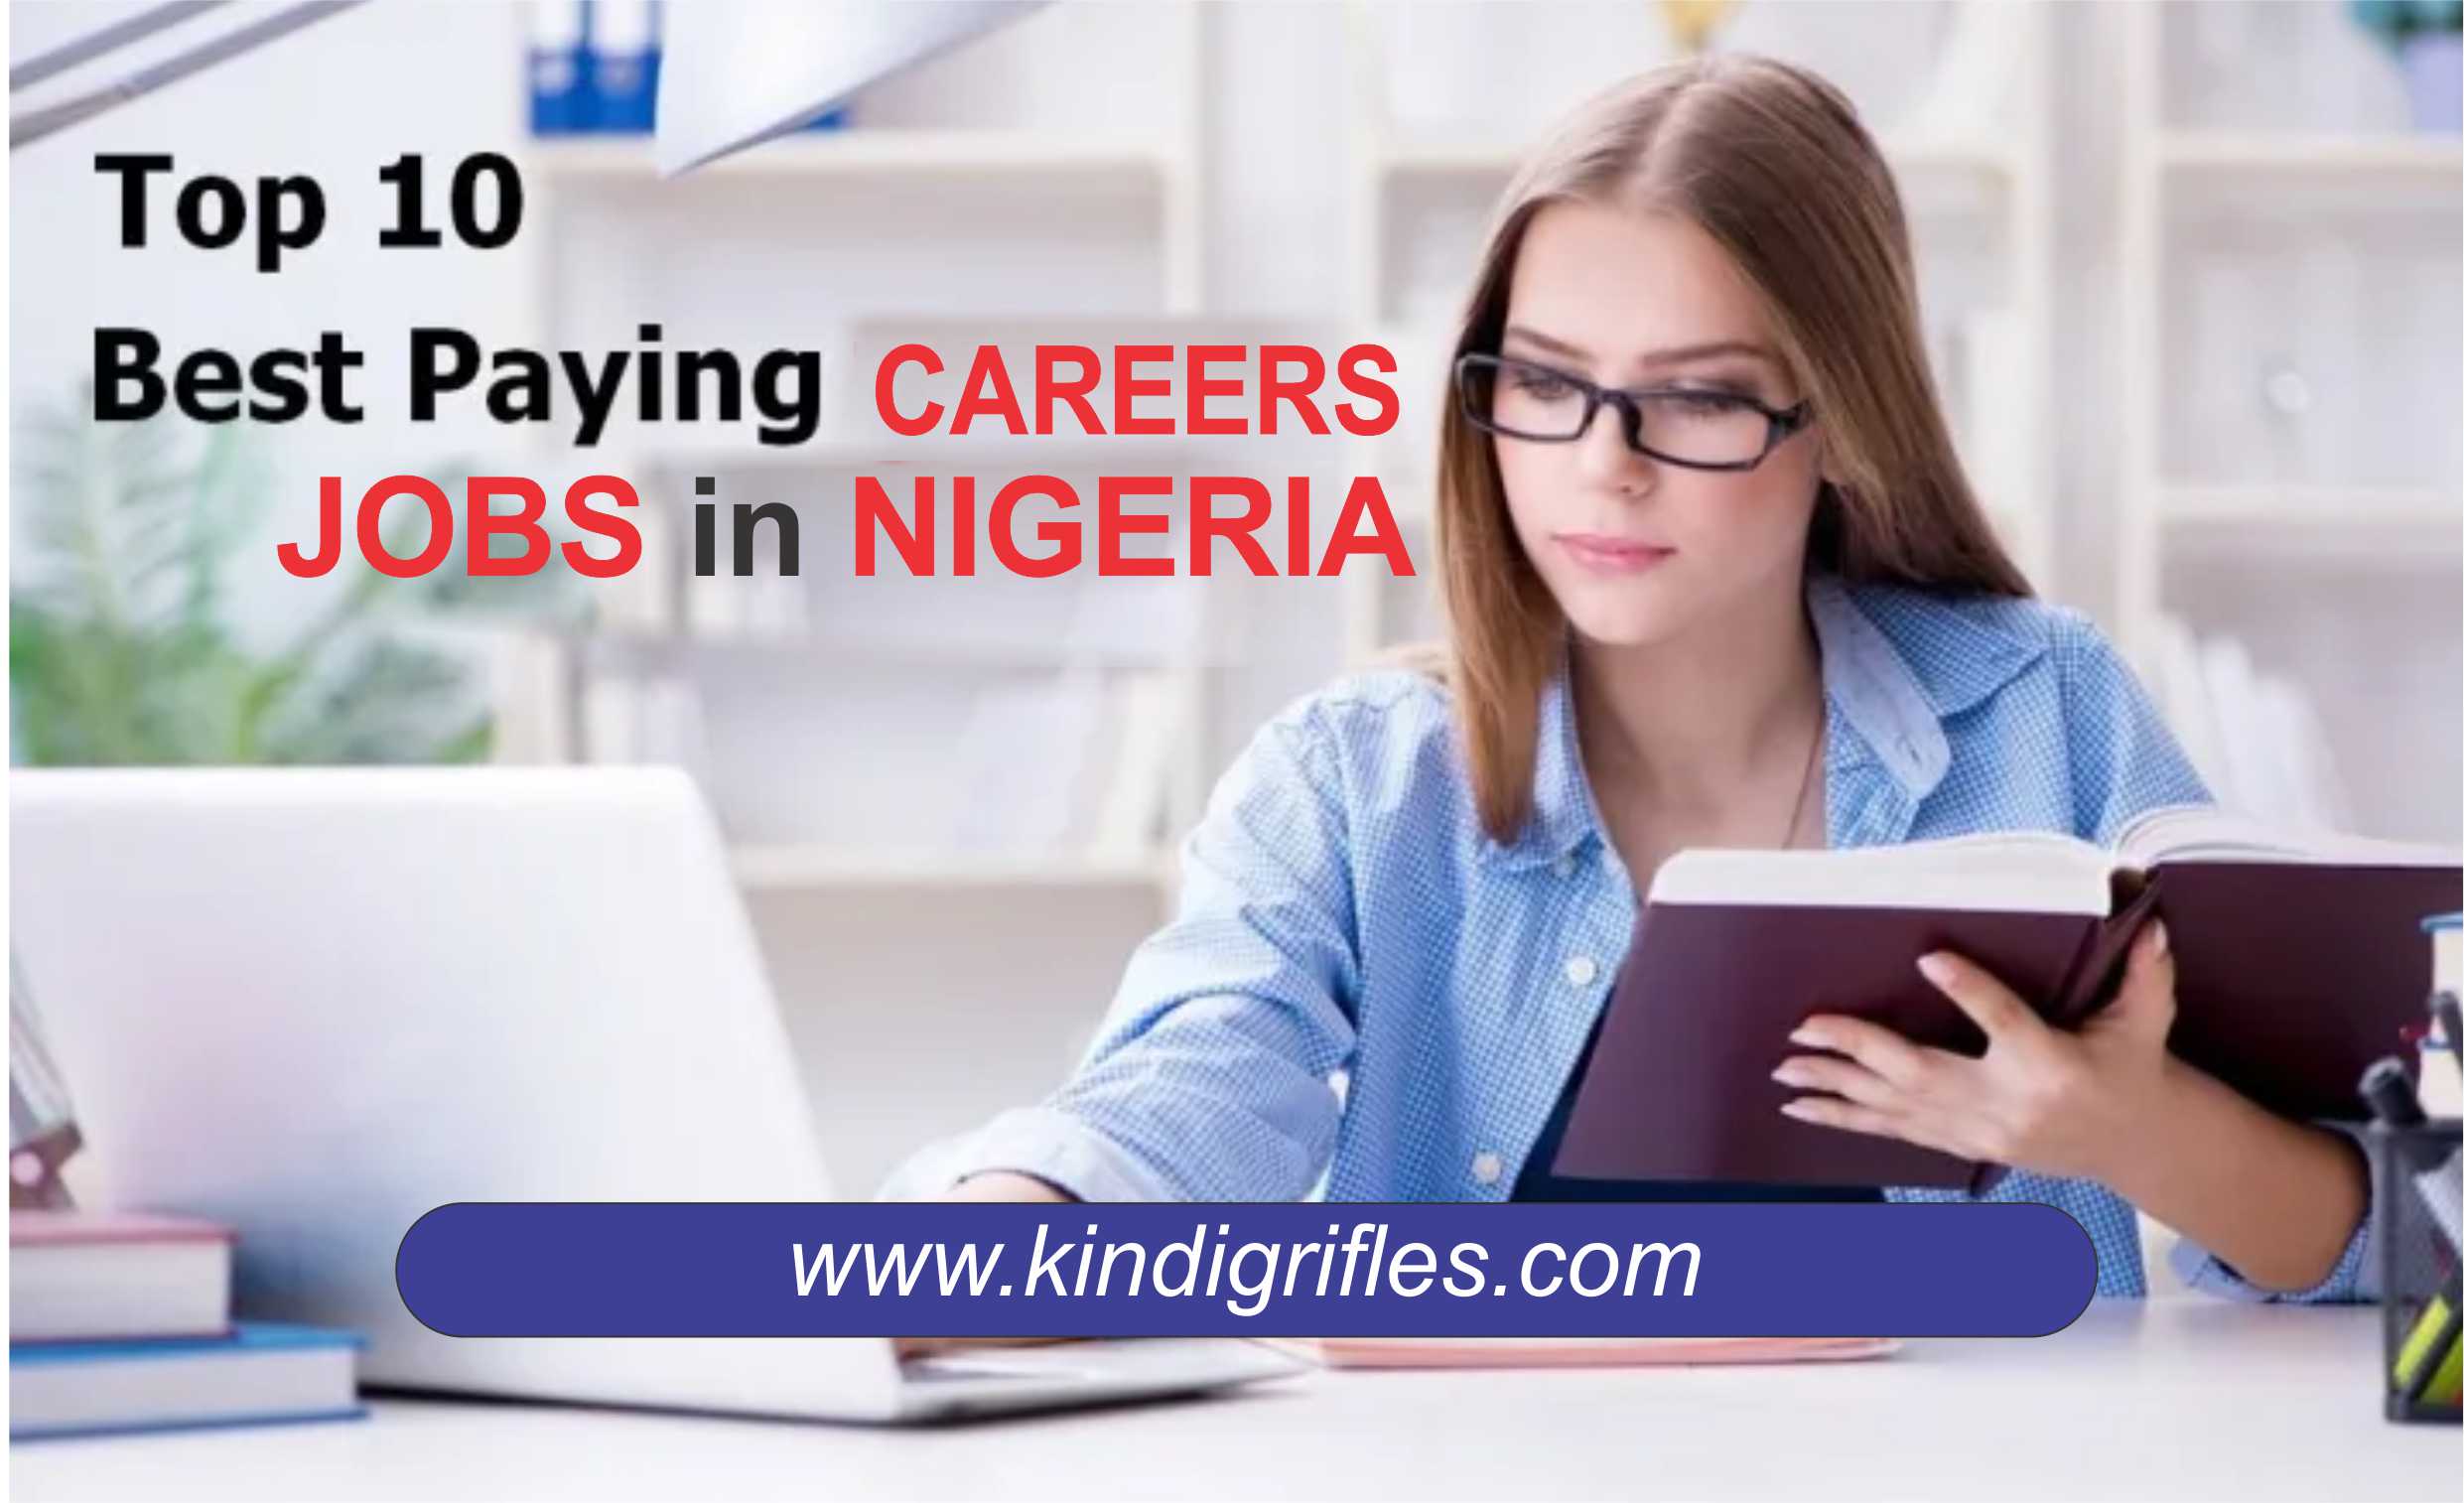 Top 10 Careers in Nigeria